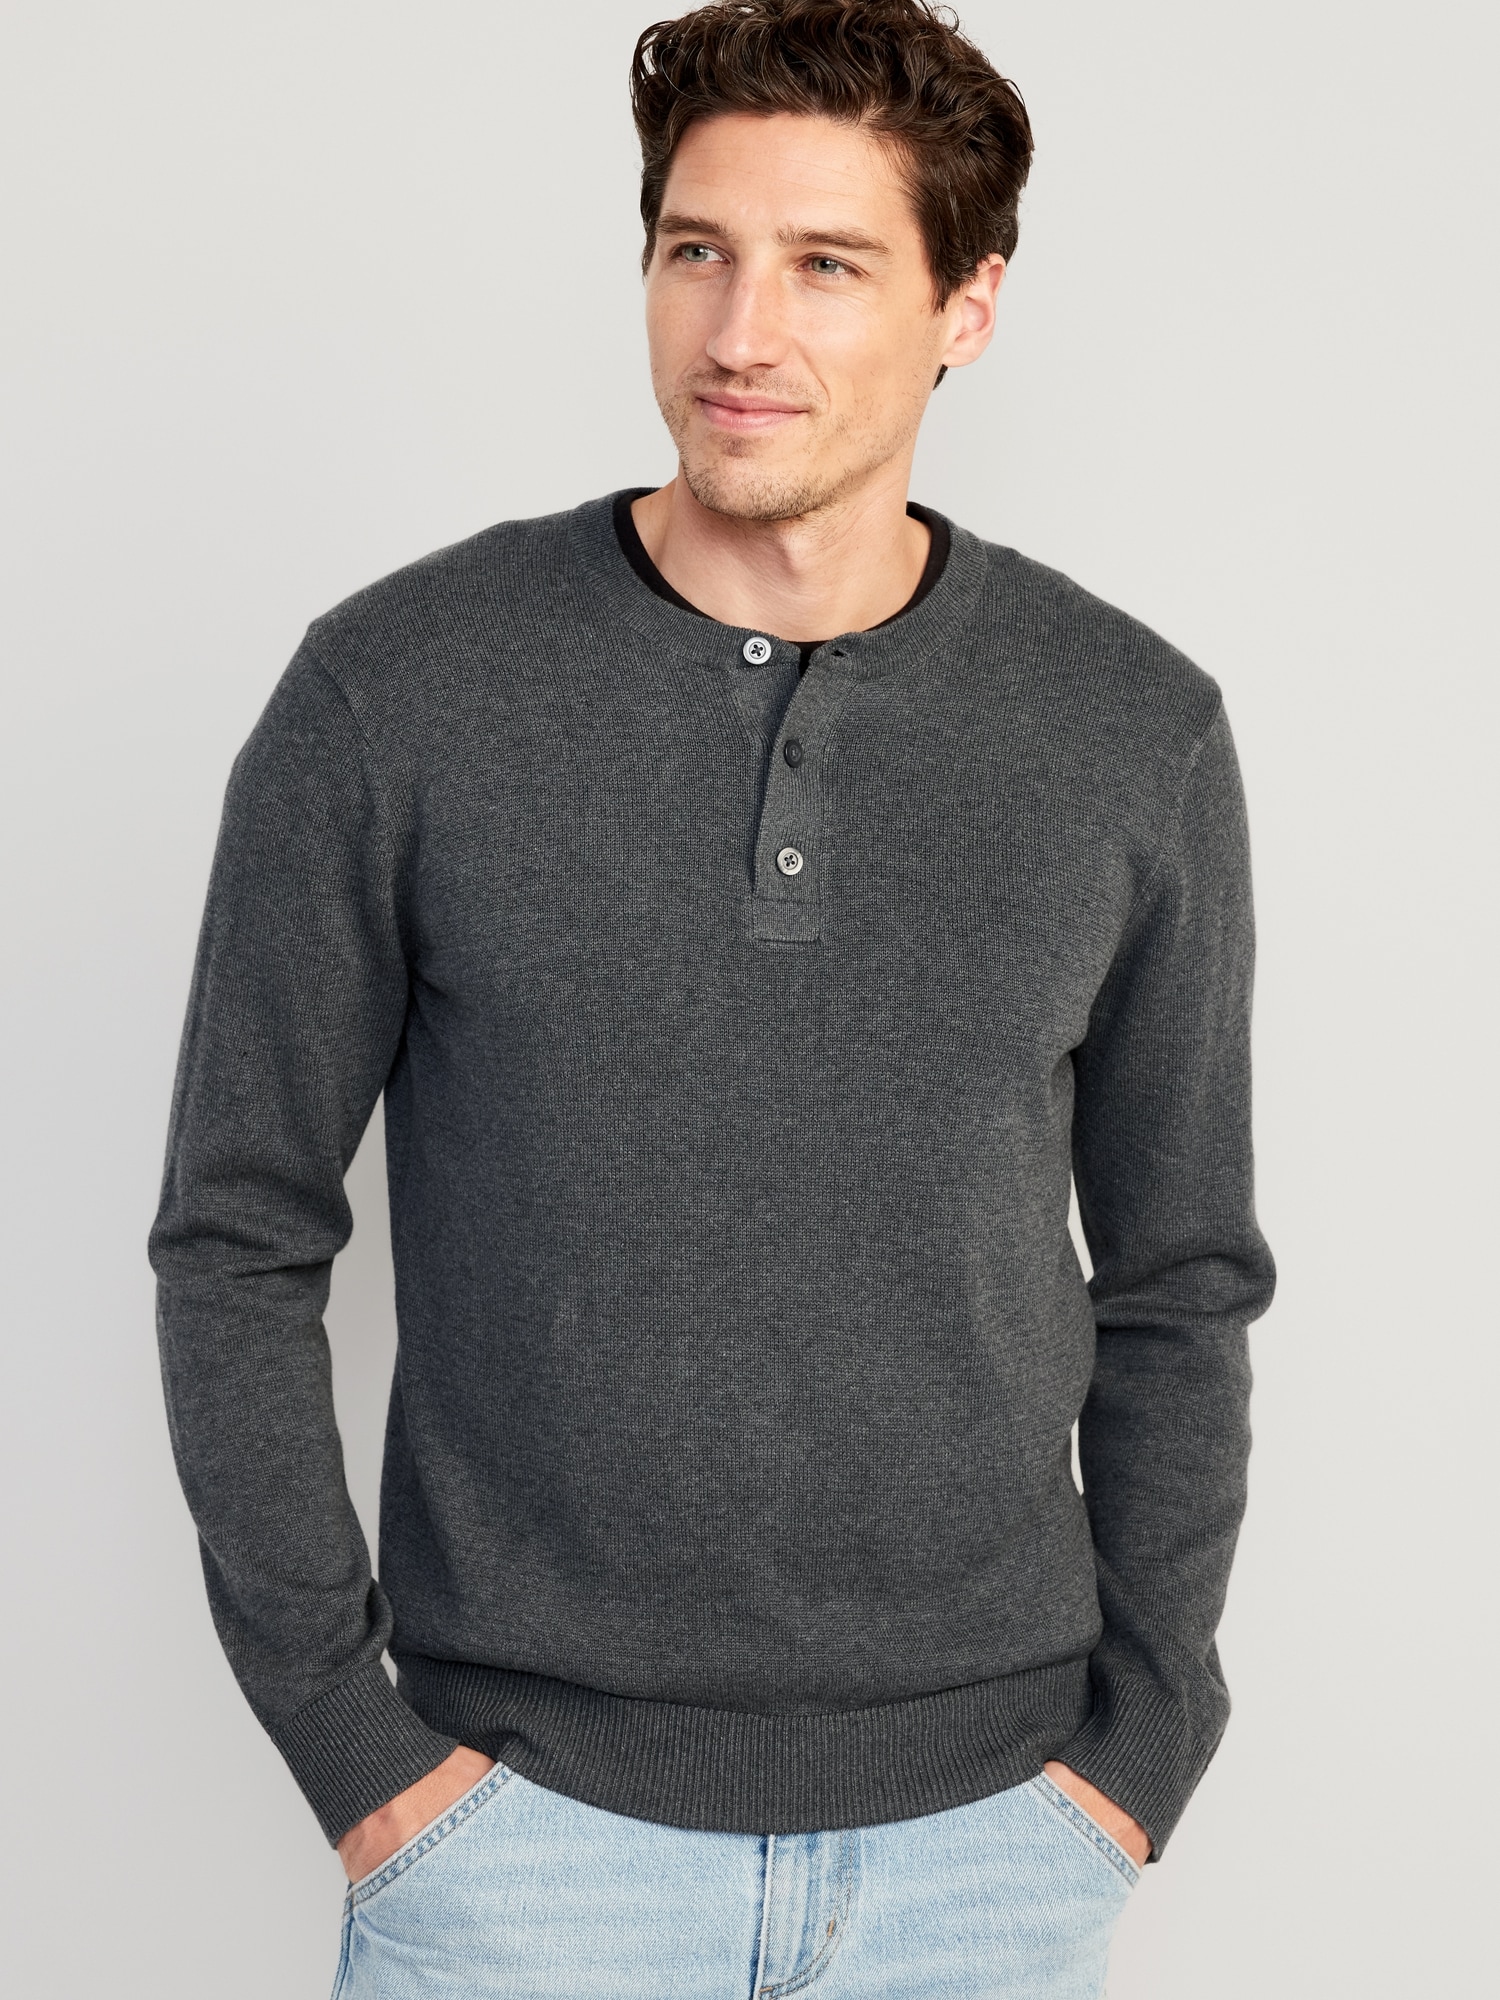 Henley Sweater for Men | Old Navy